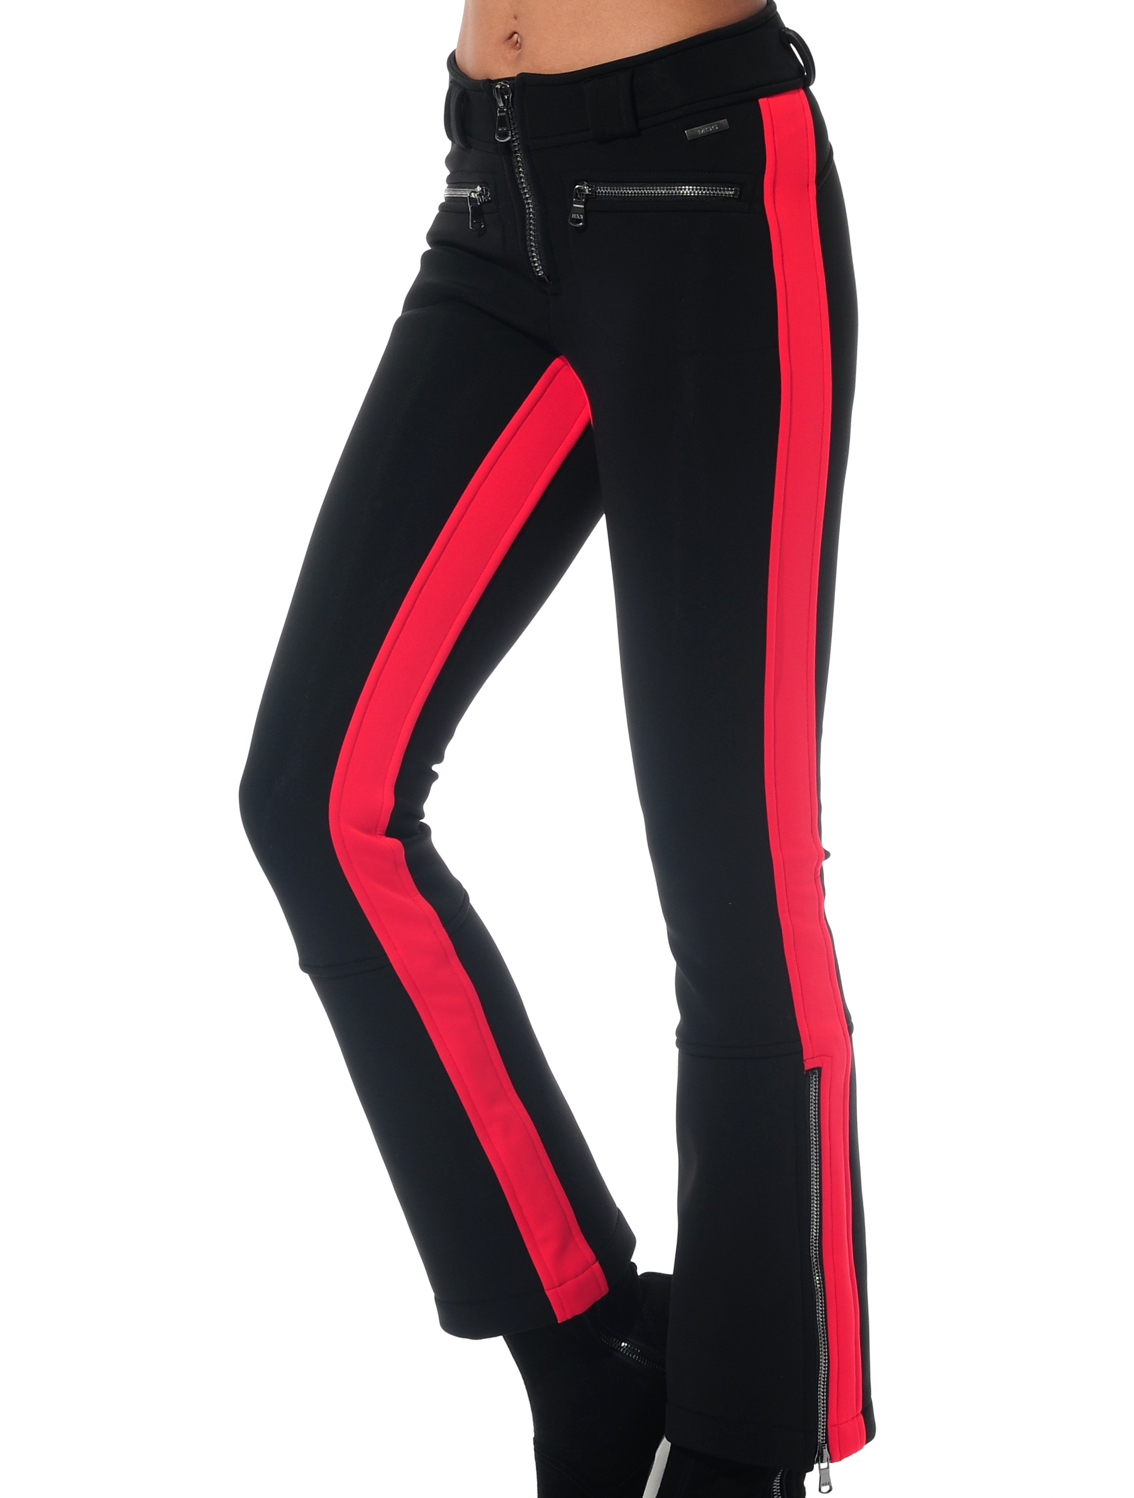 4way stretch jet pants black/red 